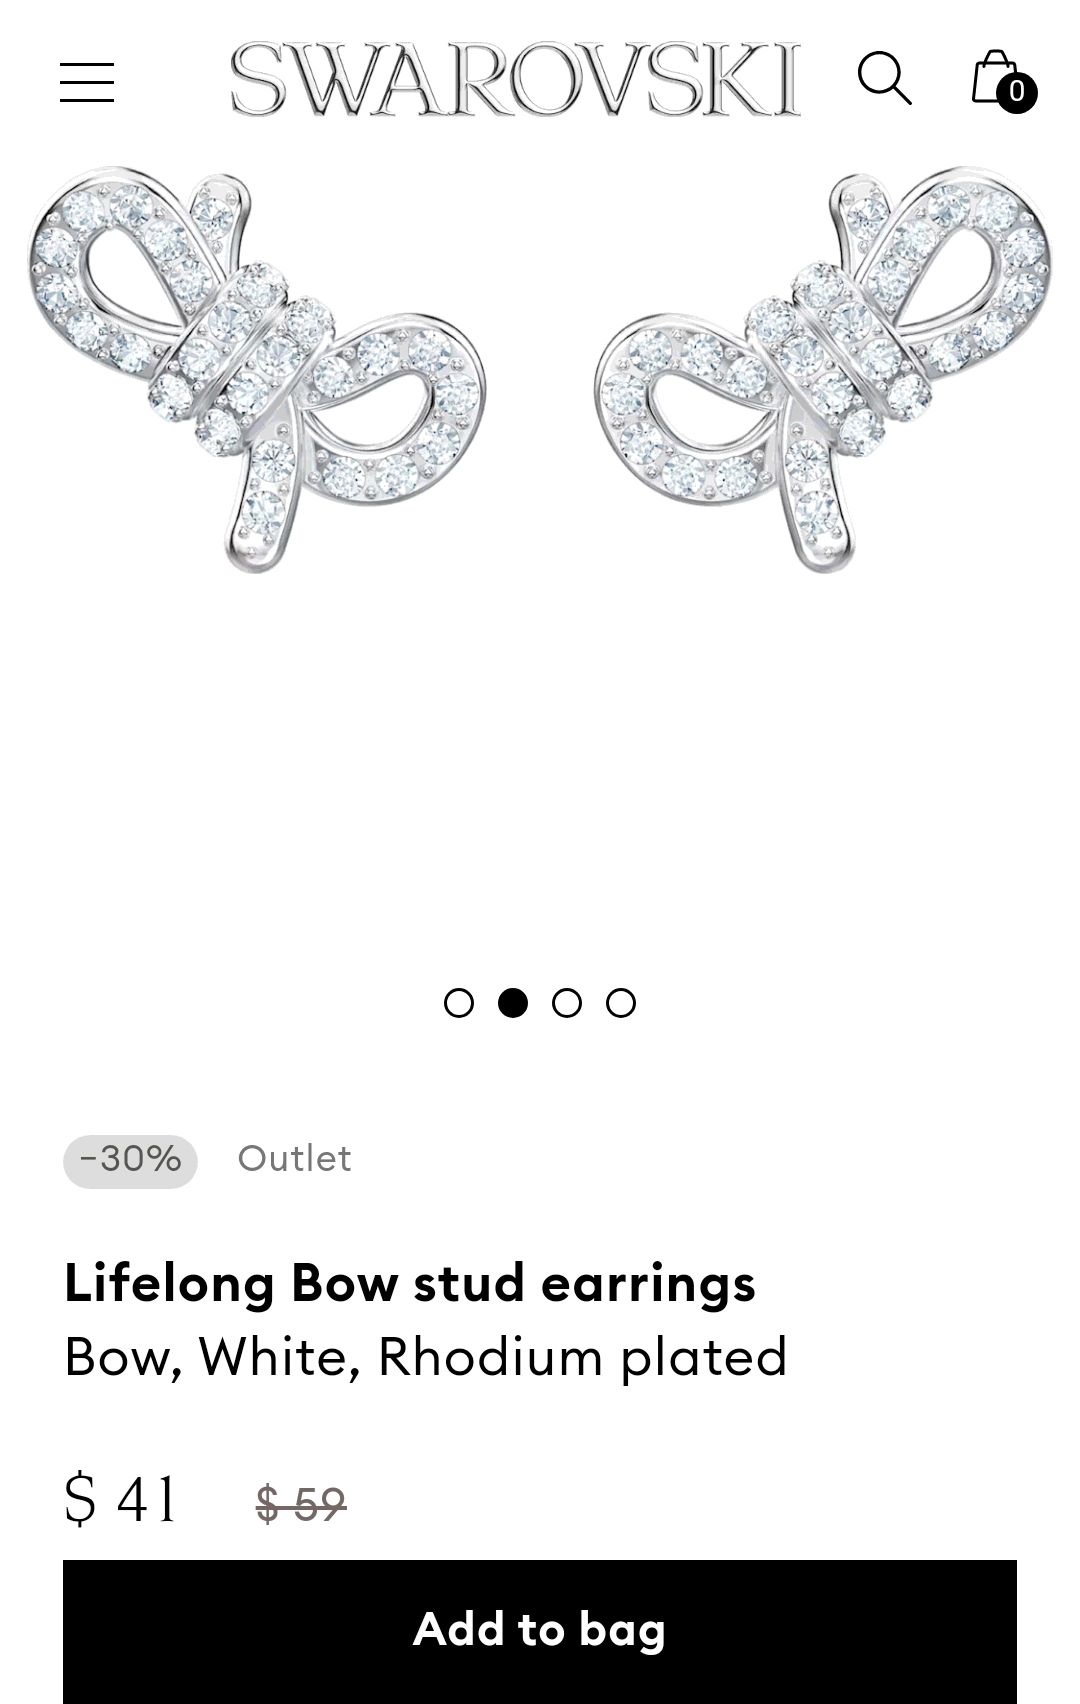 Lifelong Bow stud earrings, Bow, White, Rhodium plated | Swarovski